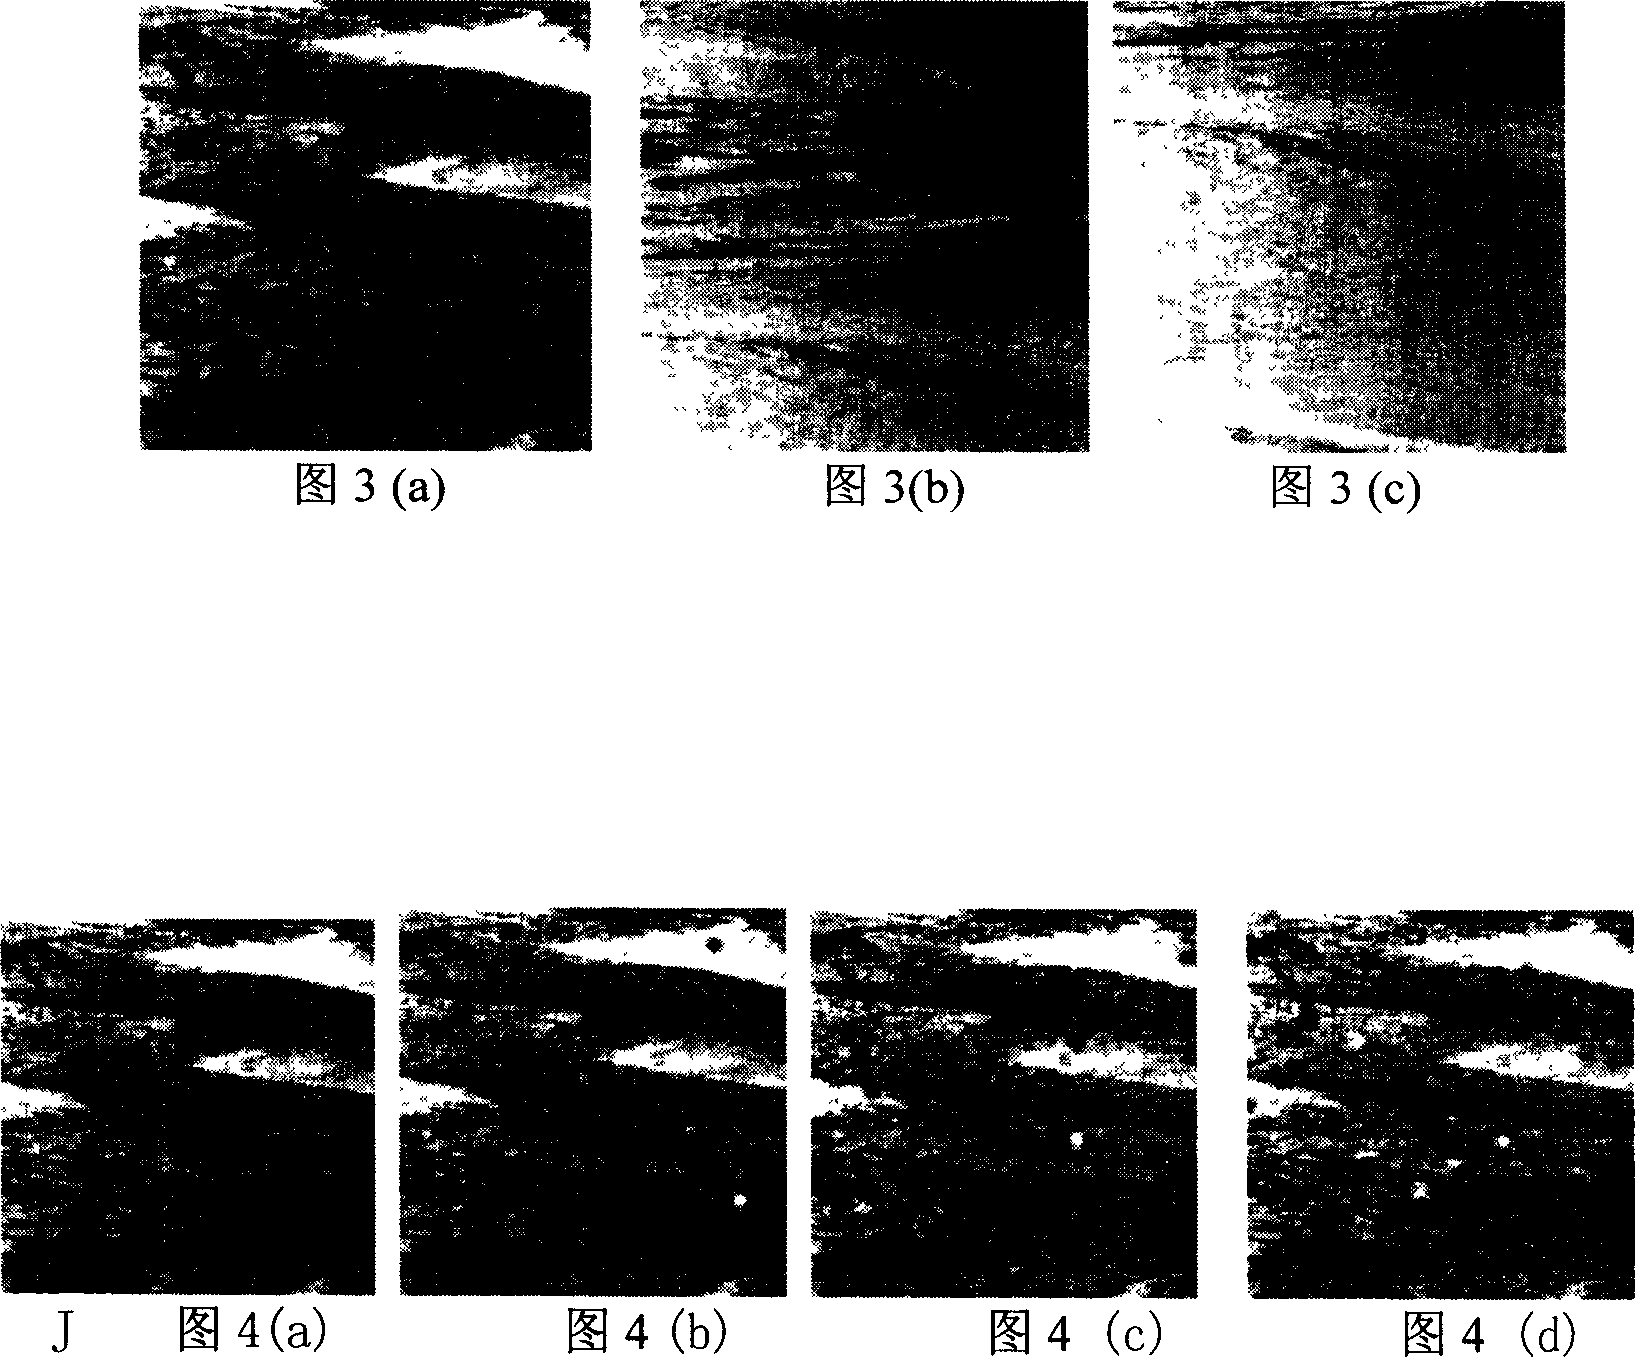 Hydroacoustic image compression method based on discrete wavelet transform under excessive bit error rate